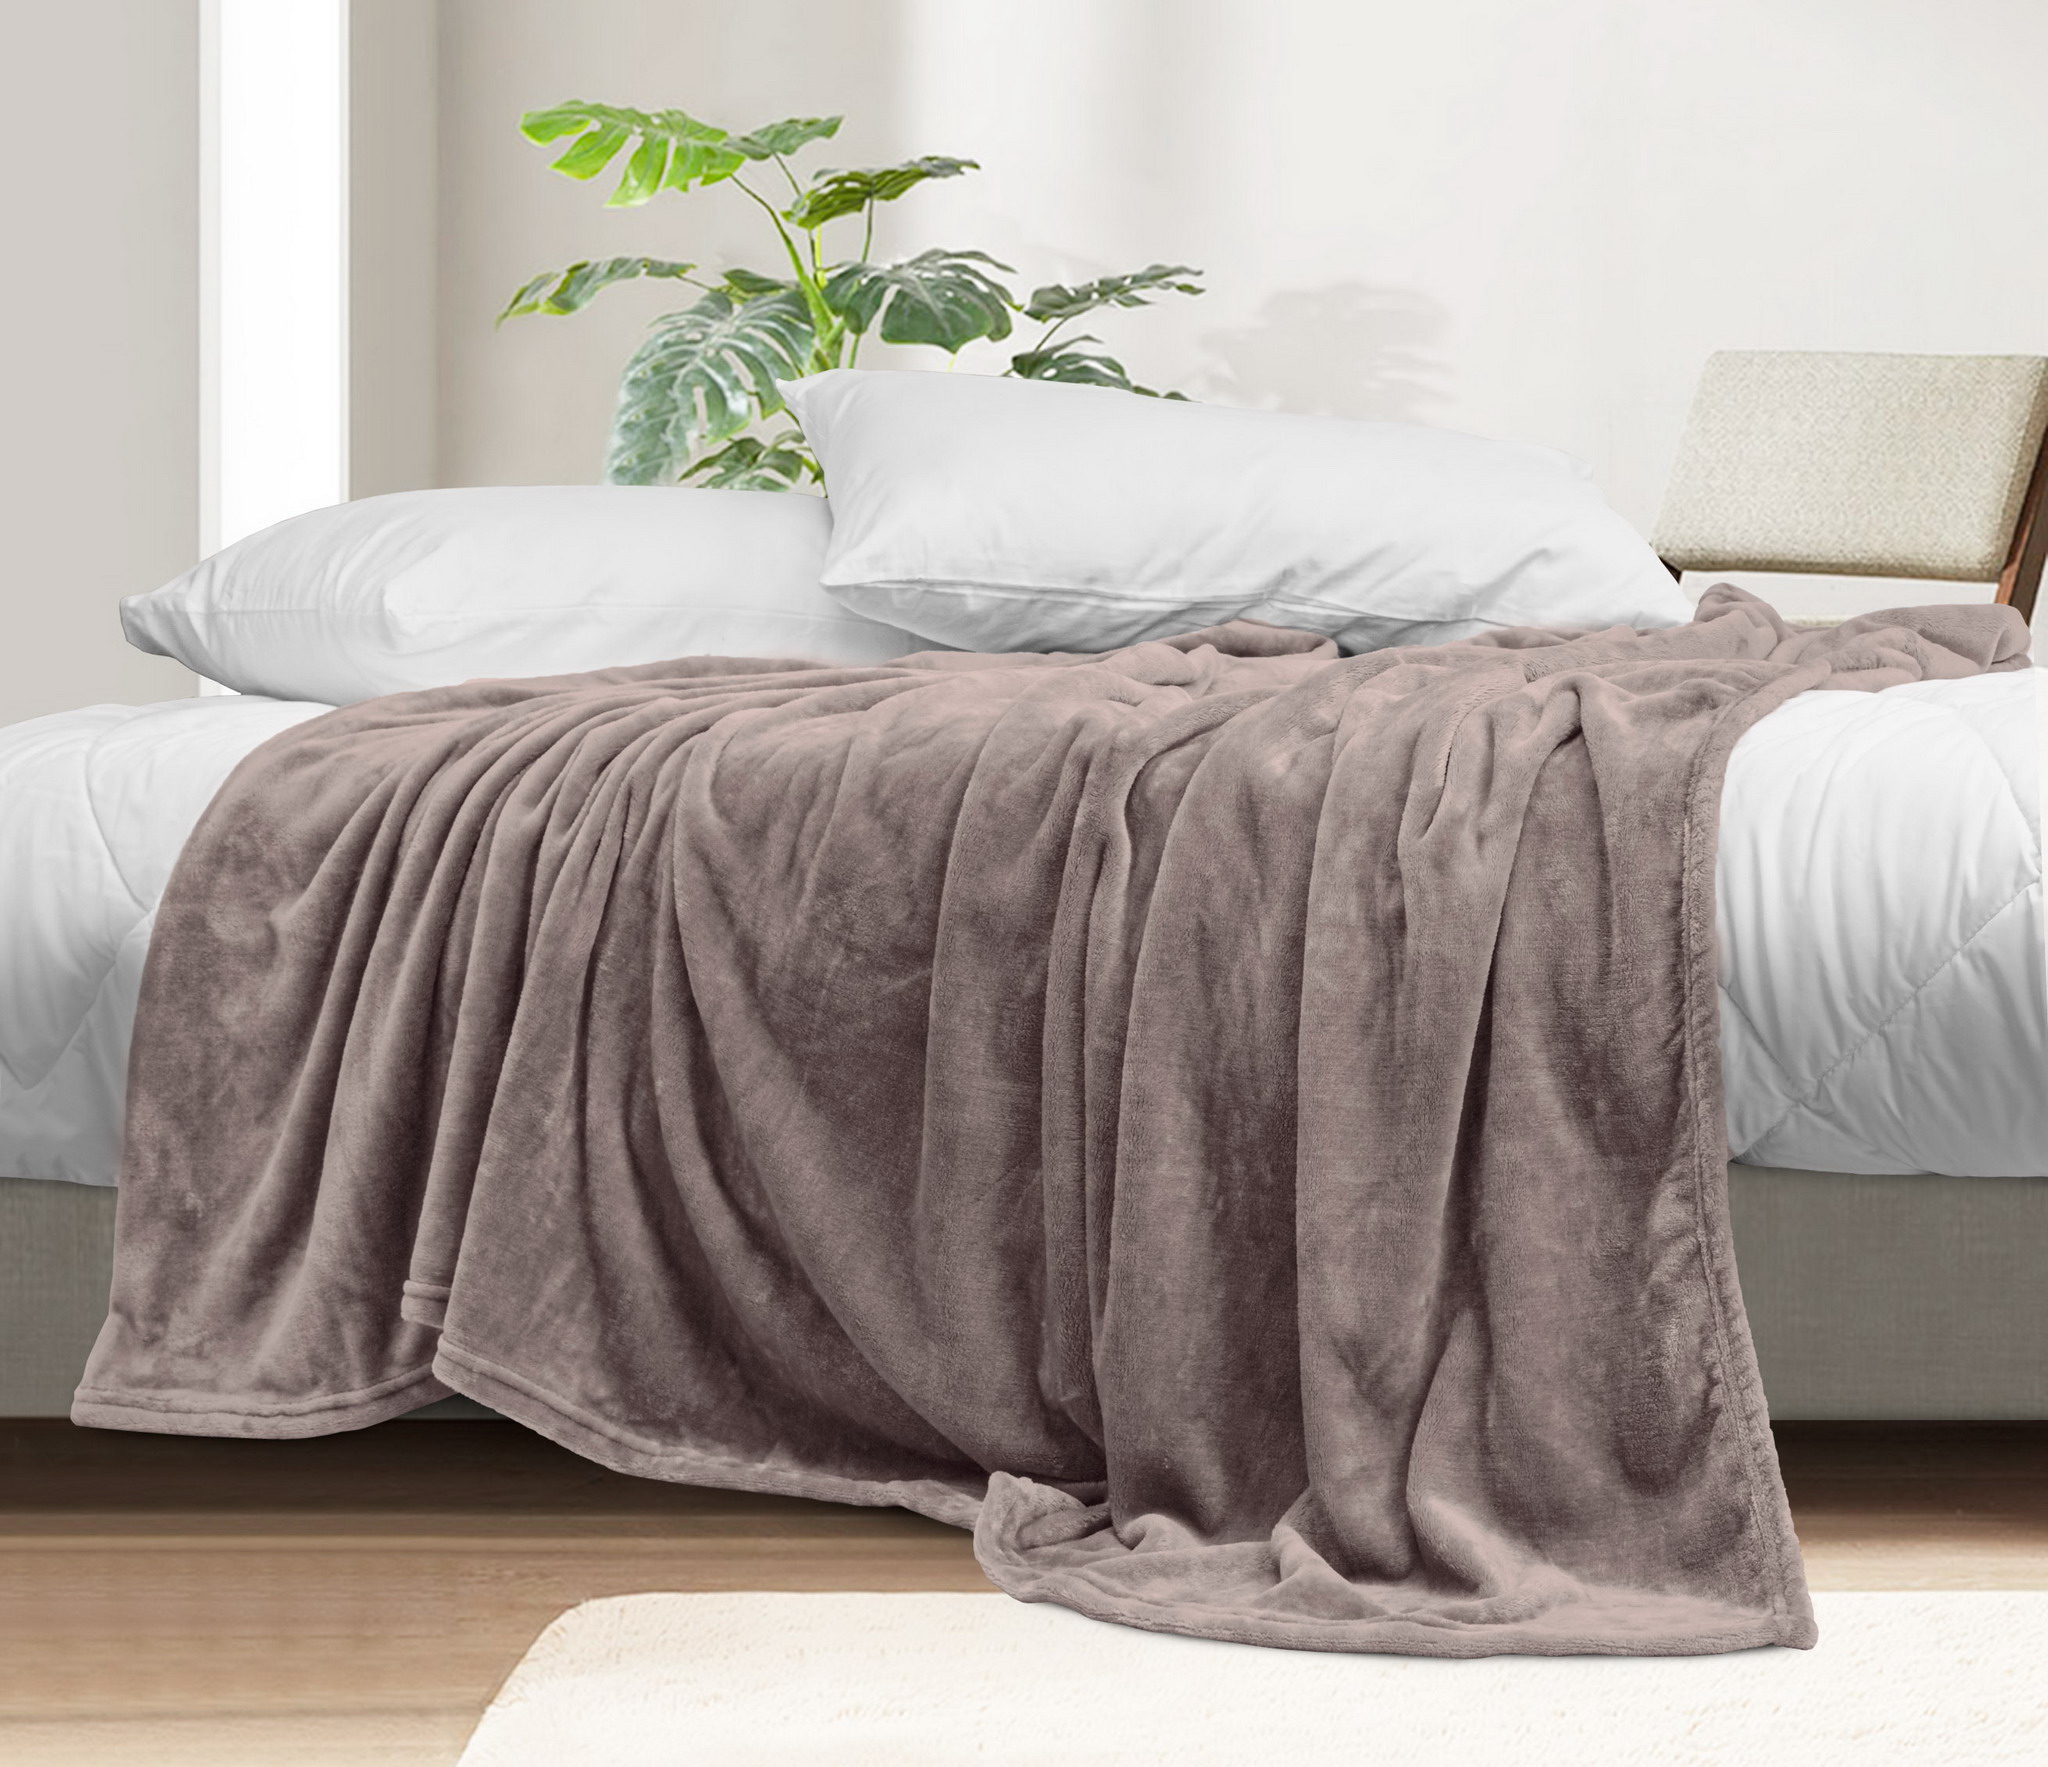 Chăn nỉ Akemi Colourlush Flannel Blanket 150x200cm, 1 cái